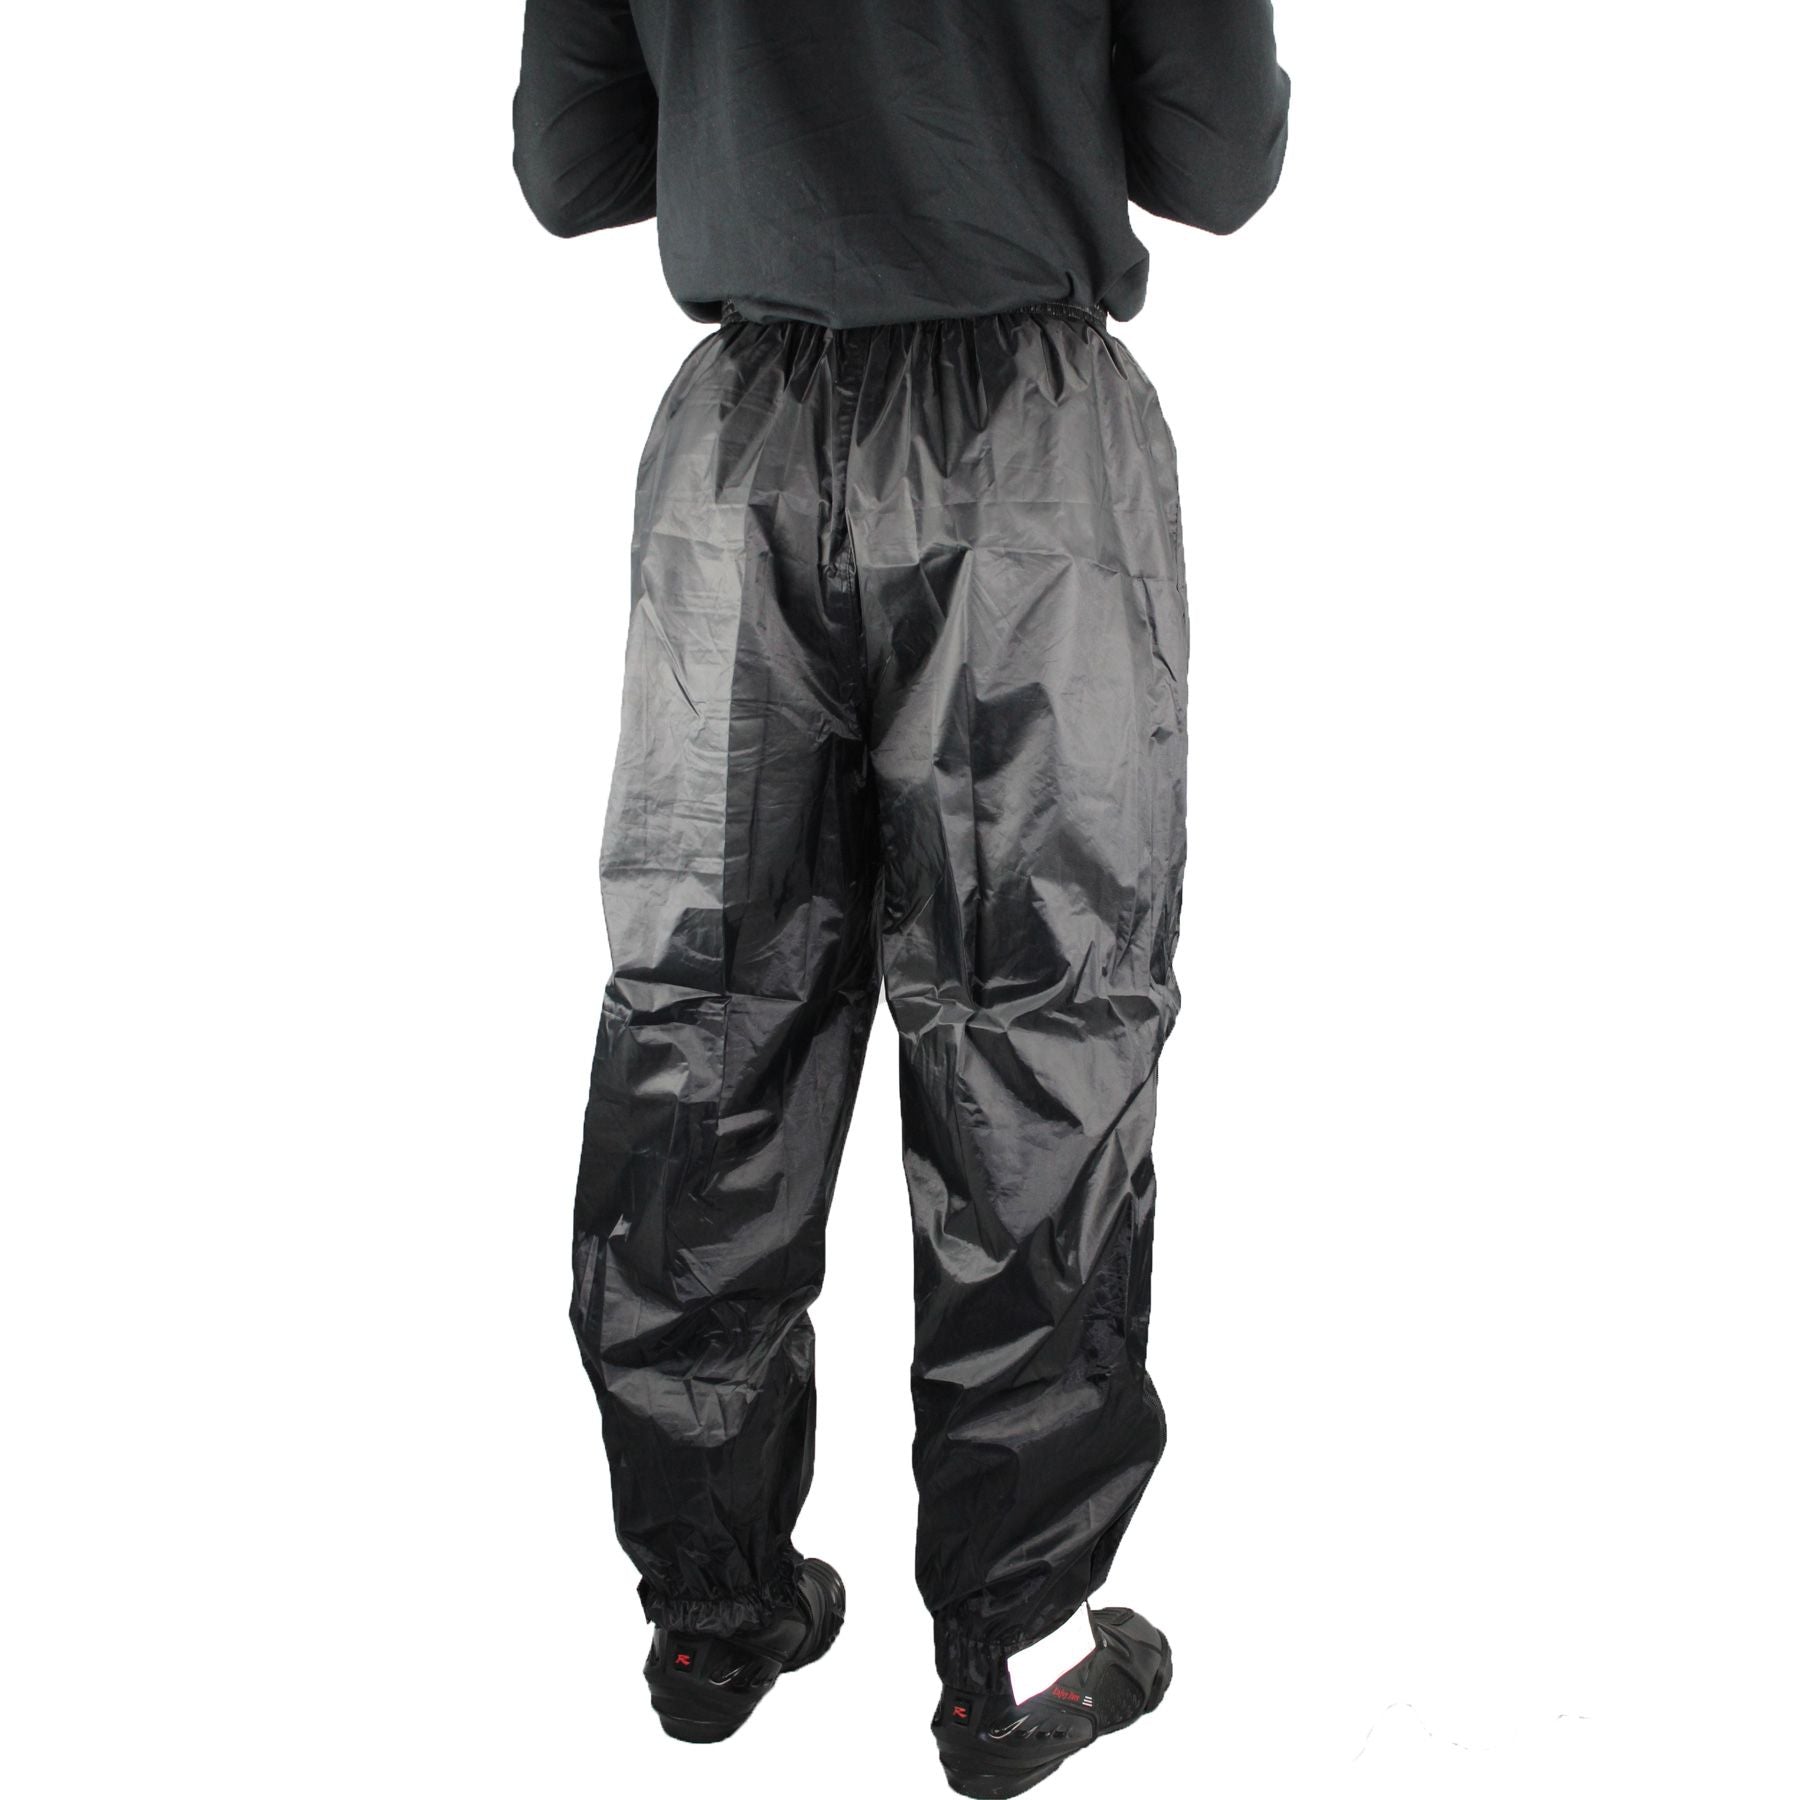 bolt waterproof over trouser for bikers outdoor rain pants 5B6 5D 11214 1 p